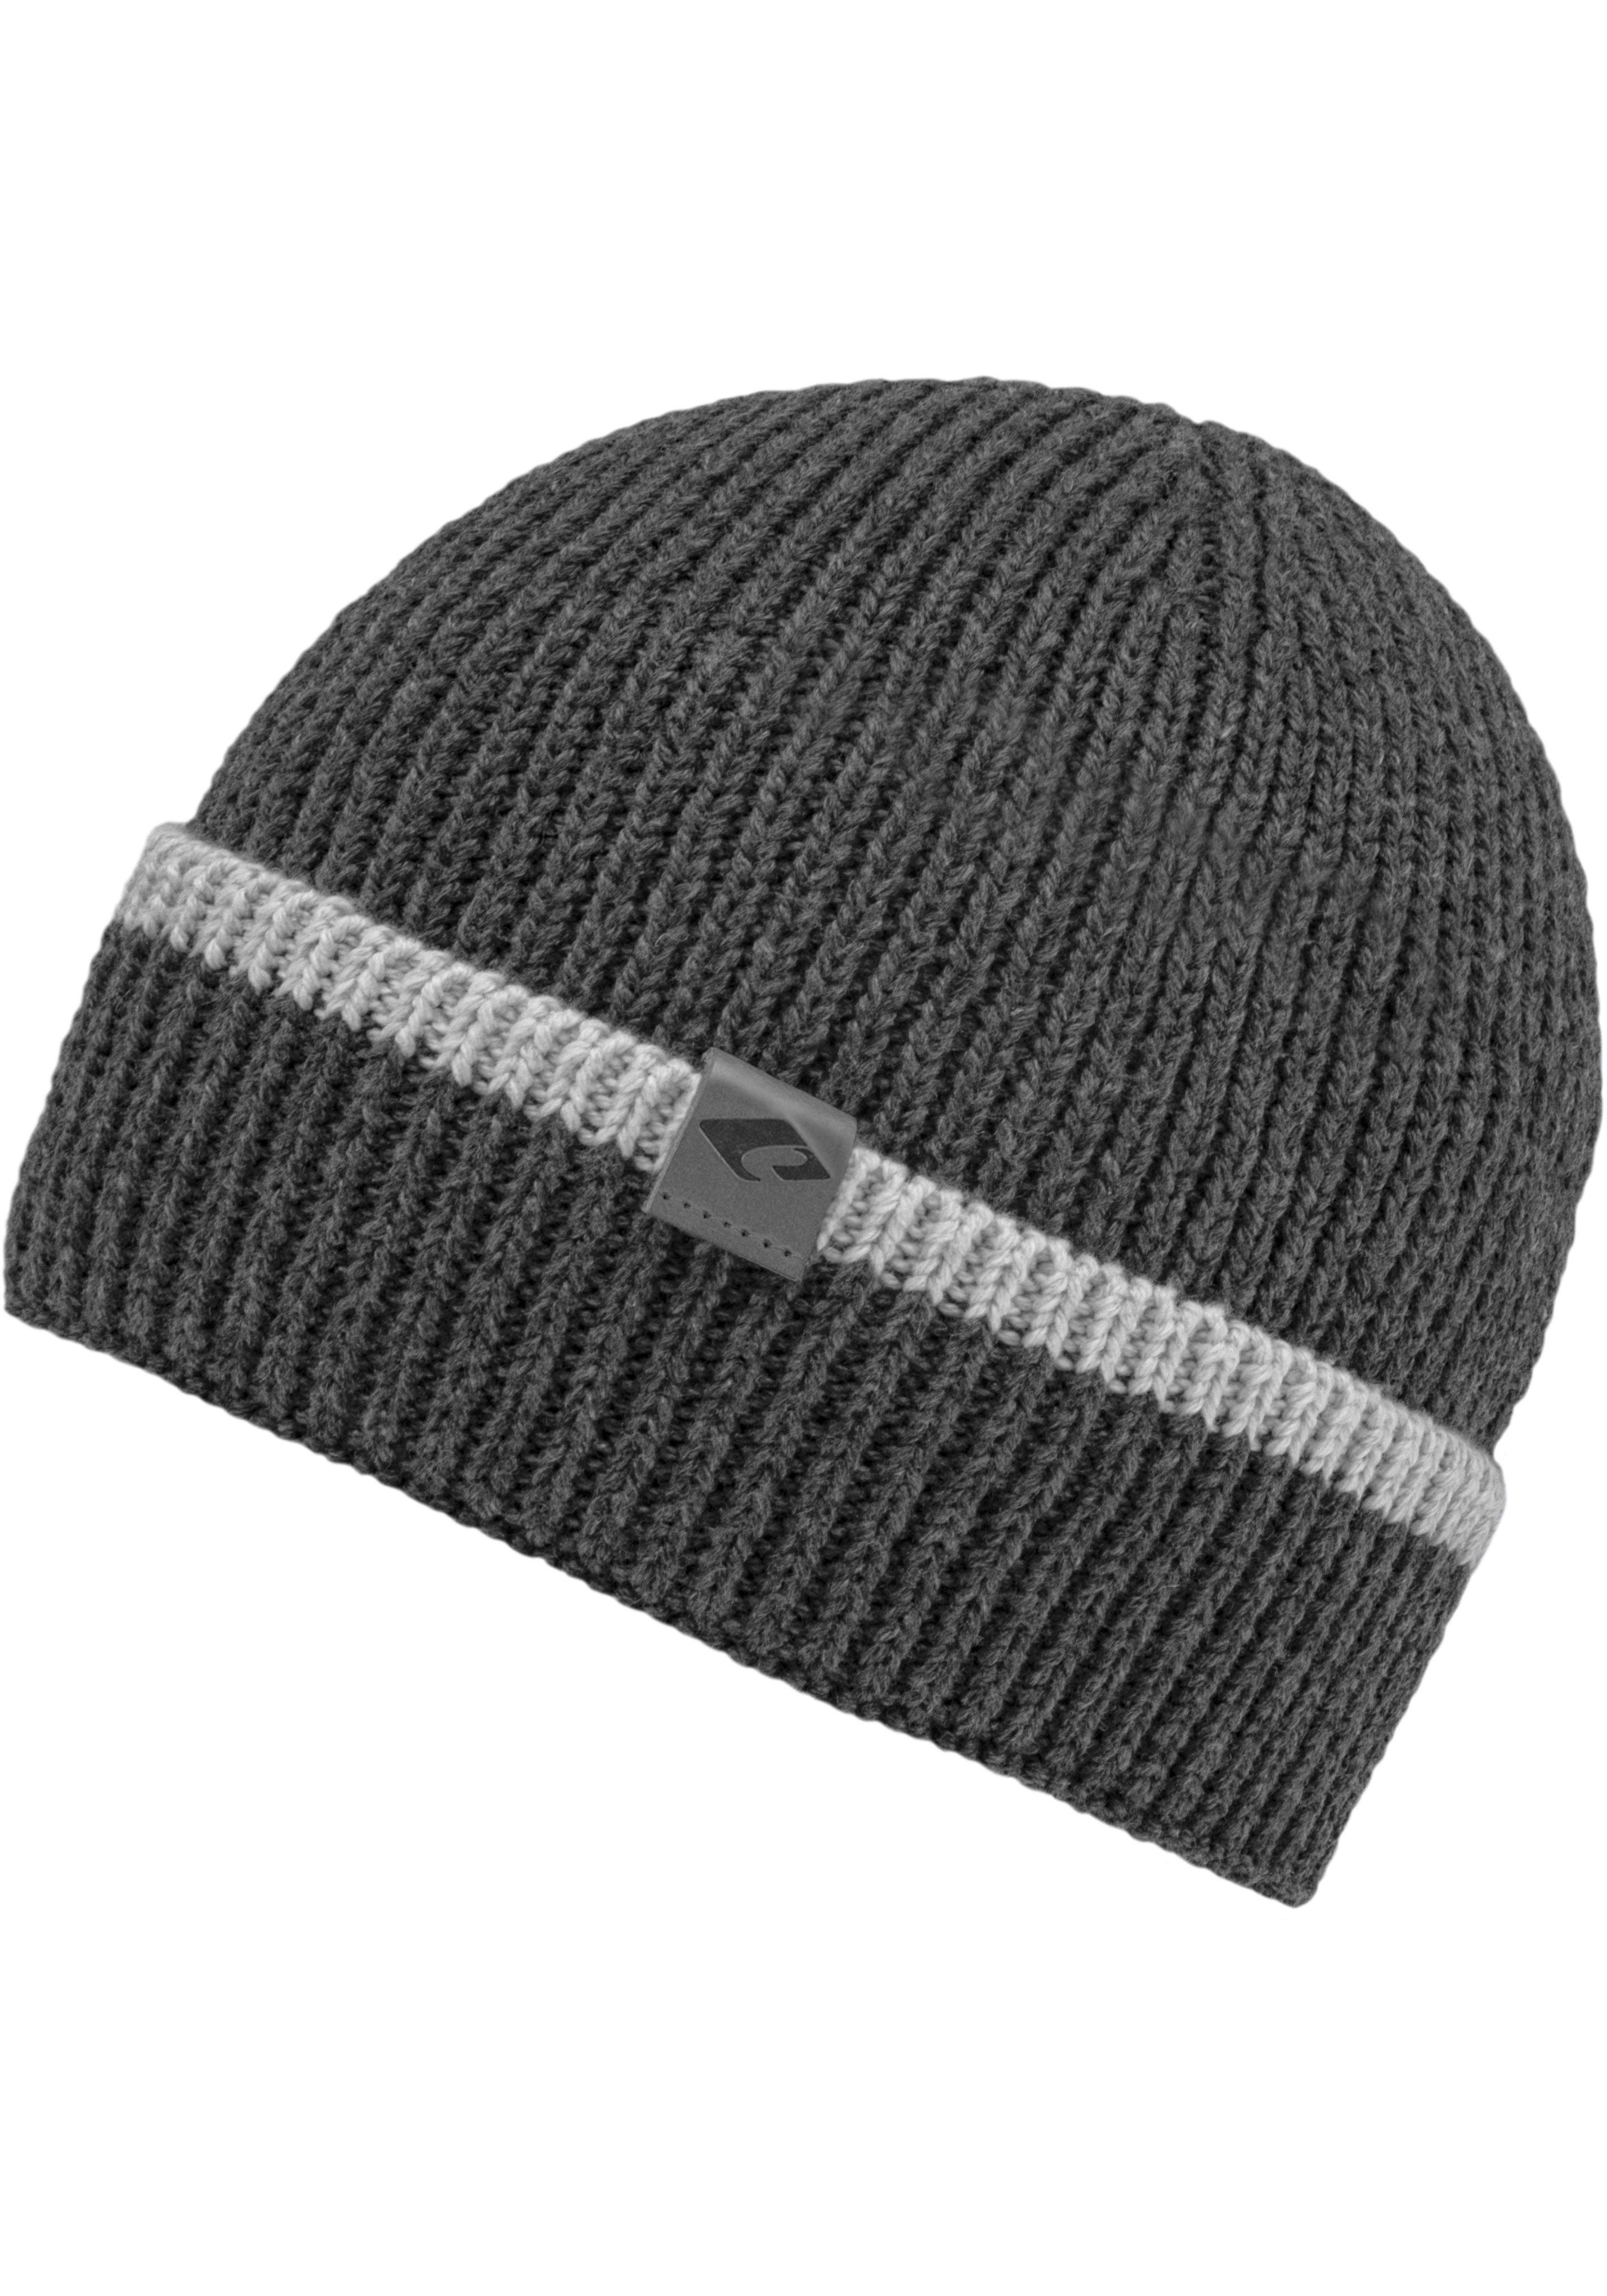 Kontrastfarbener Pascal Hat chillouts dark Strickmütze Rand grey